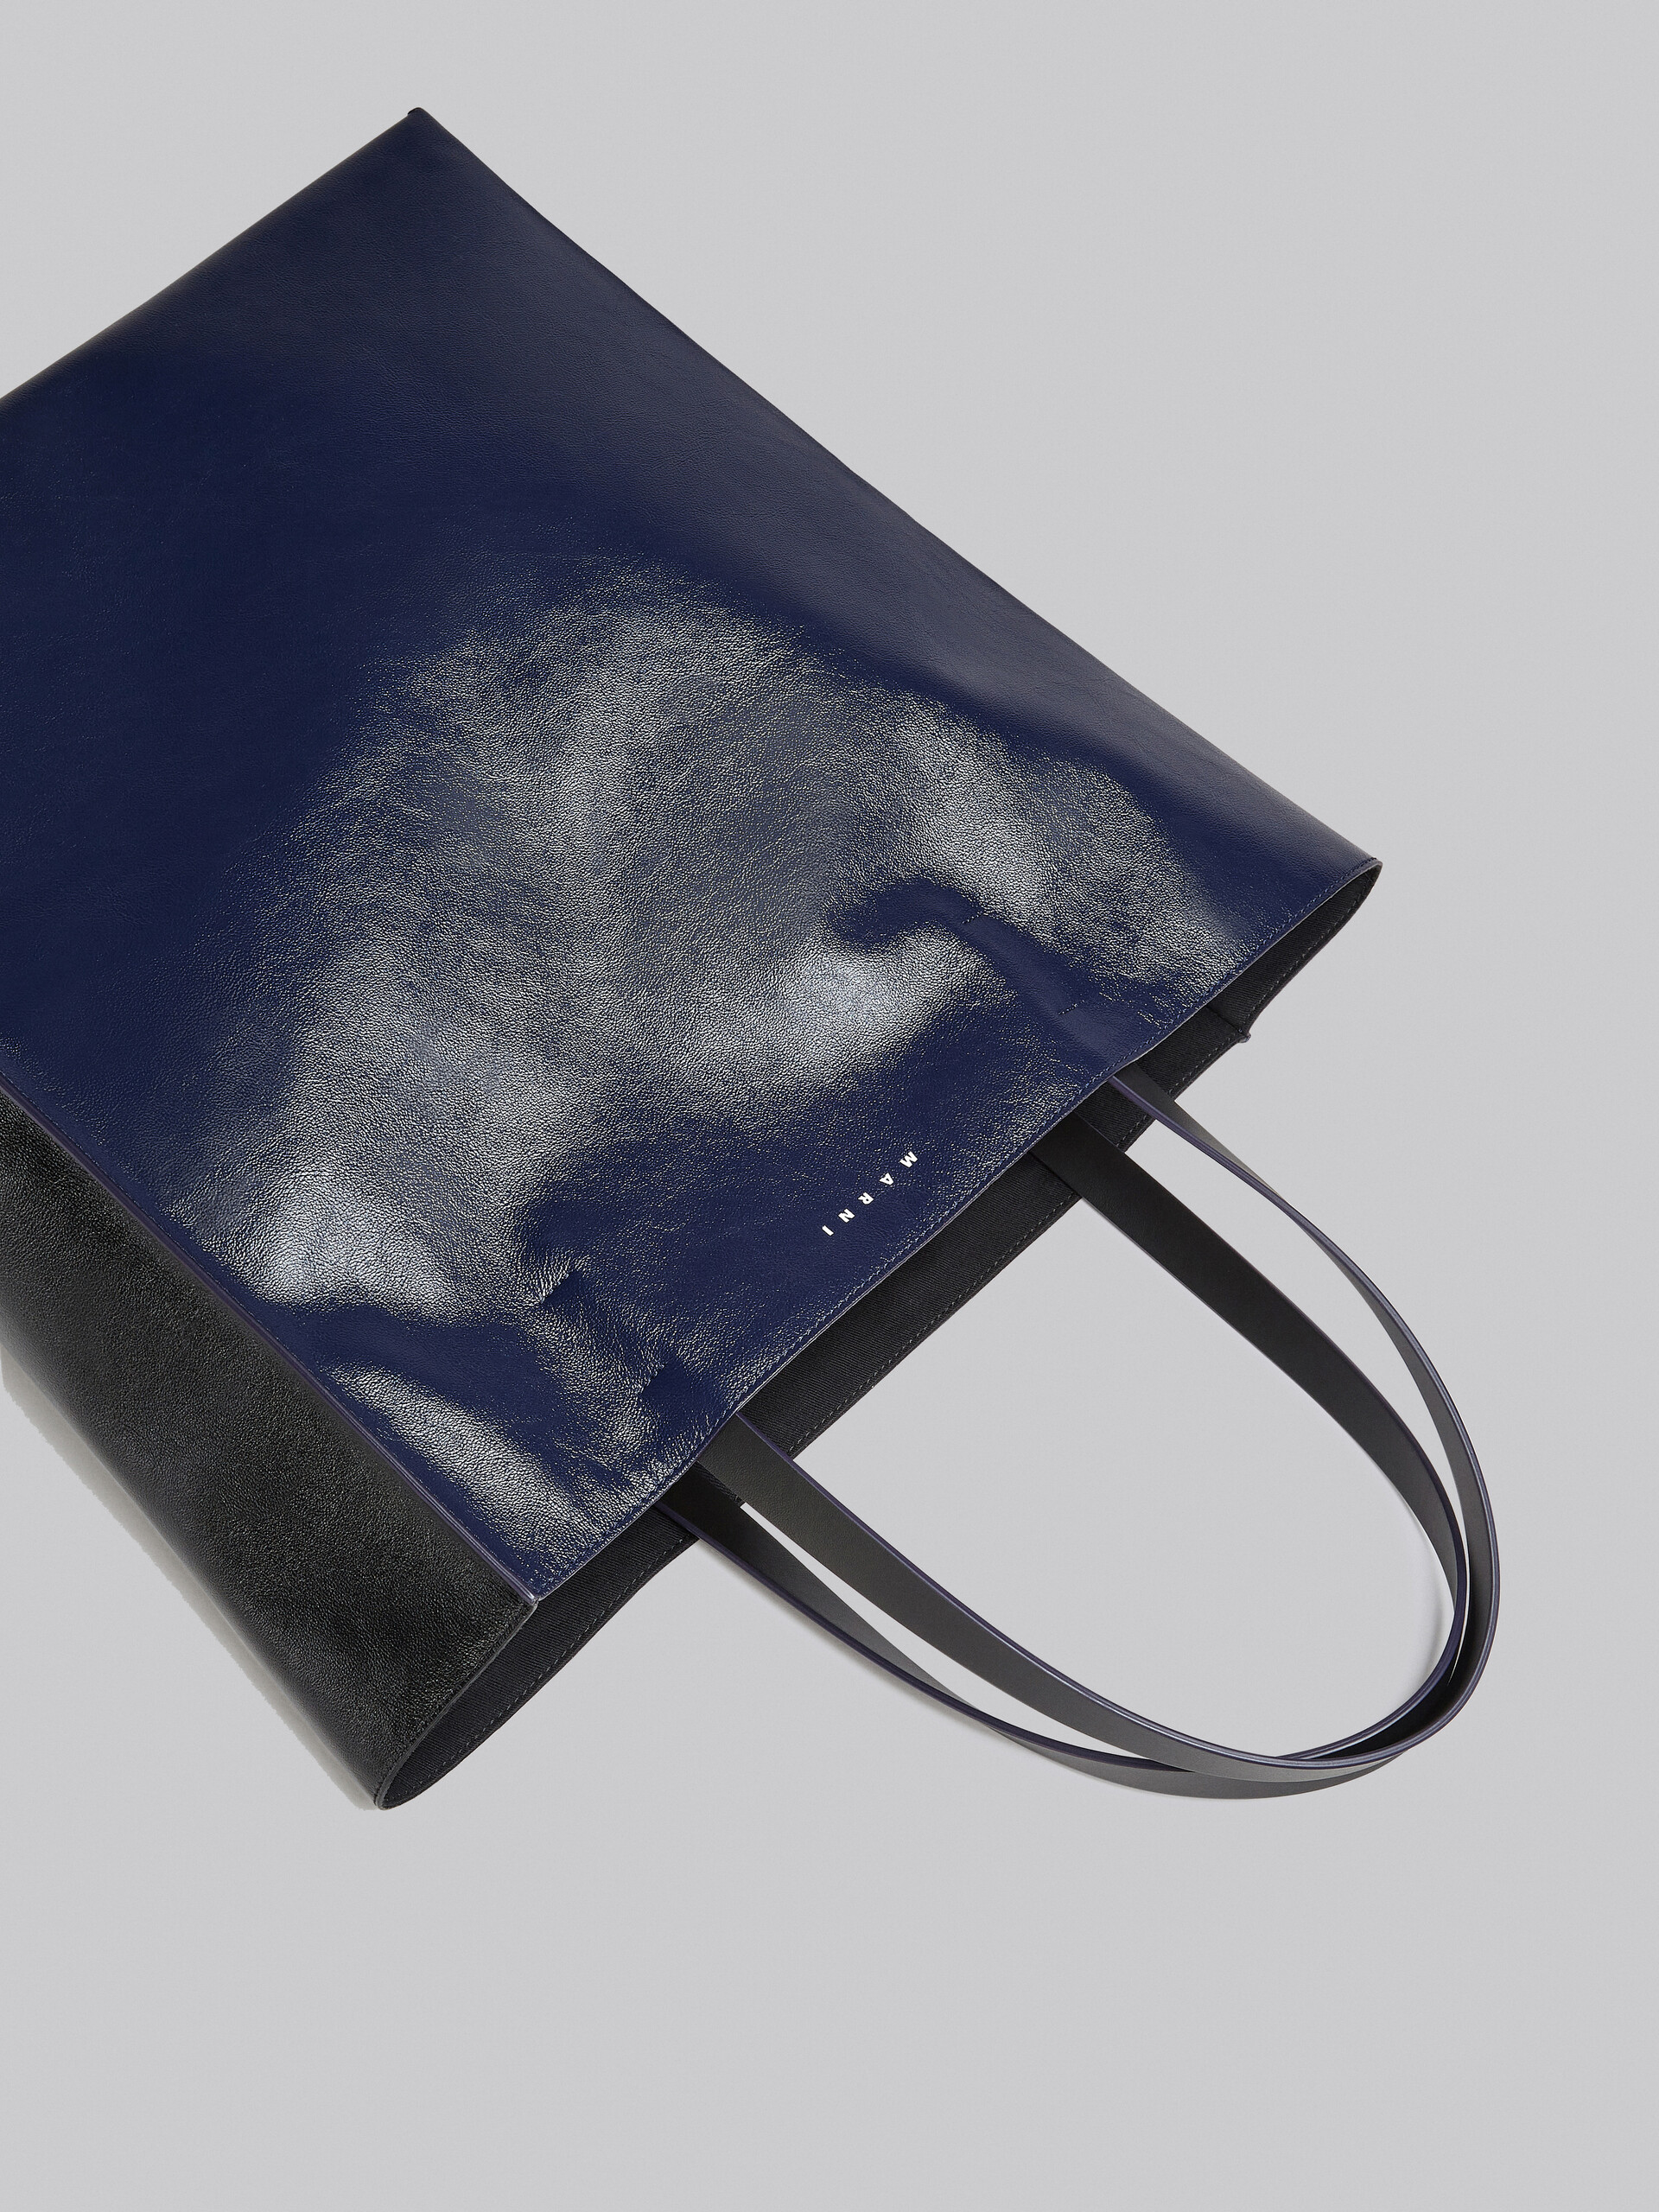 Museo Soft Bag Grande in pelle nera e blu - Borse shopping - Image 5